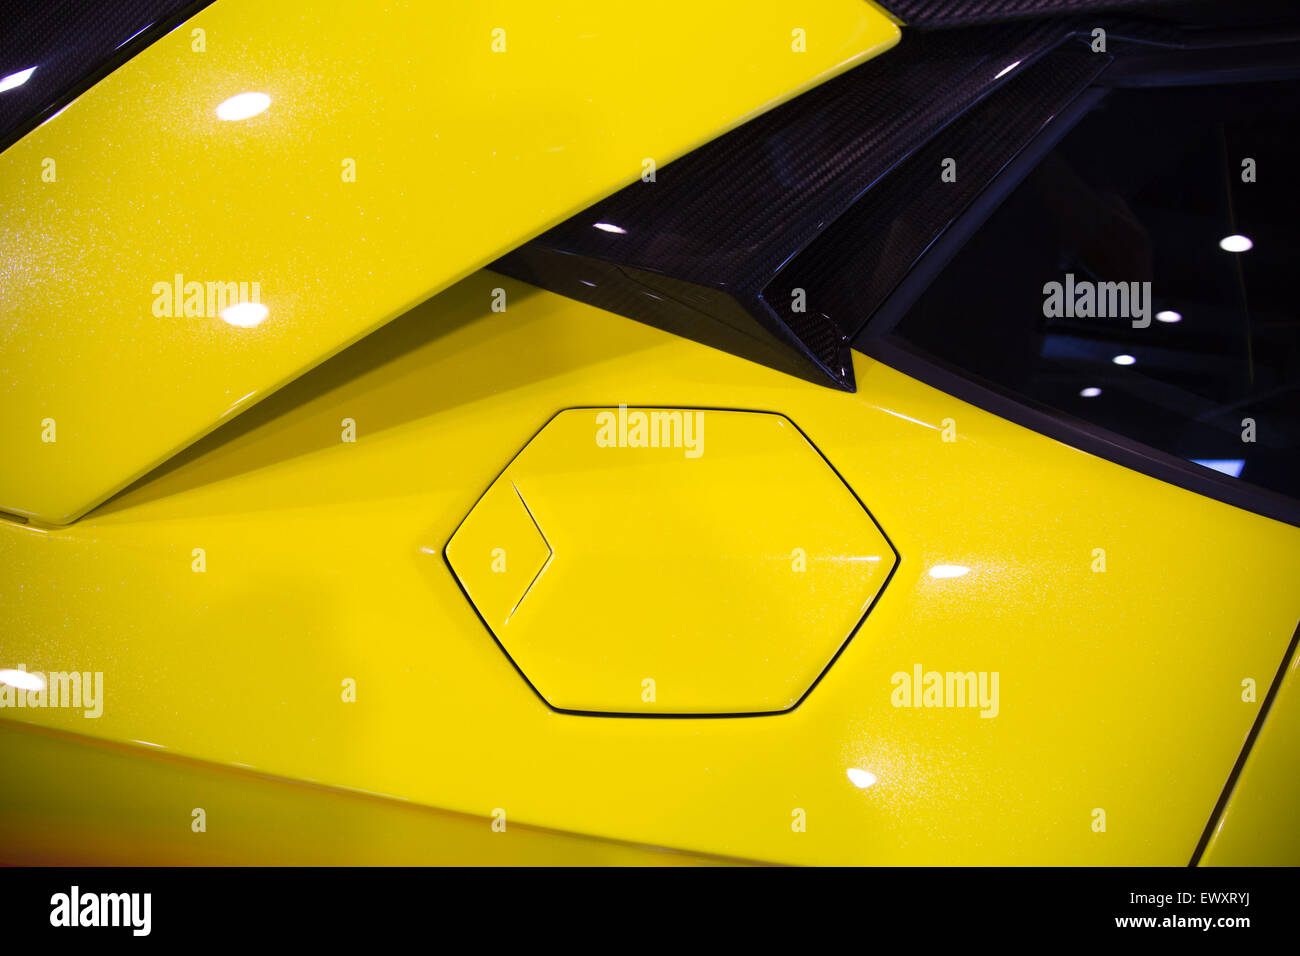 hexagonal fuel cap of a yellow sportscar Stock Photo